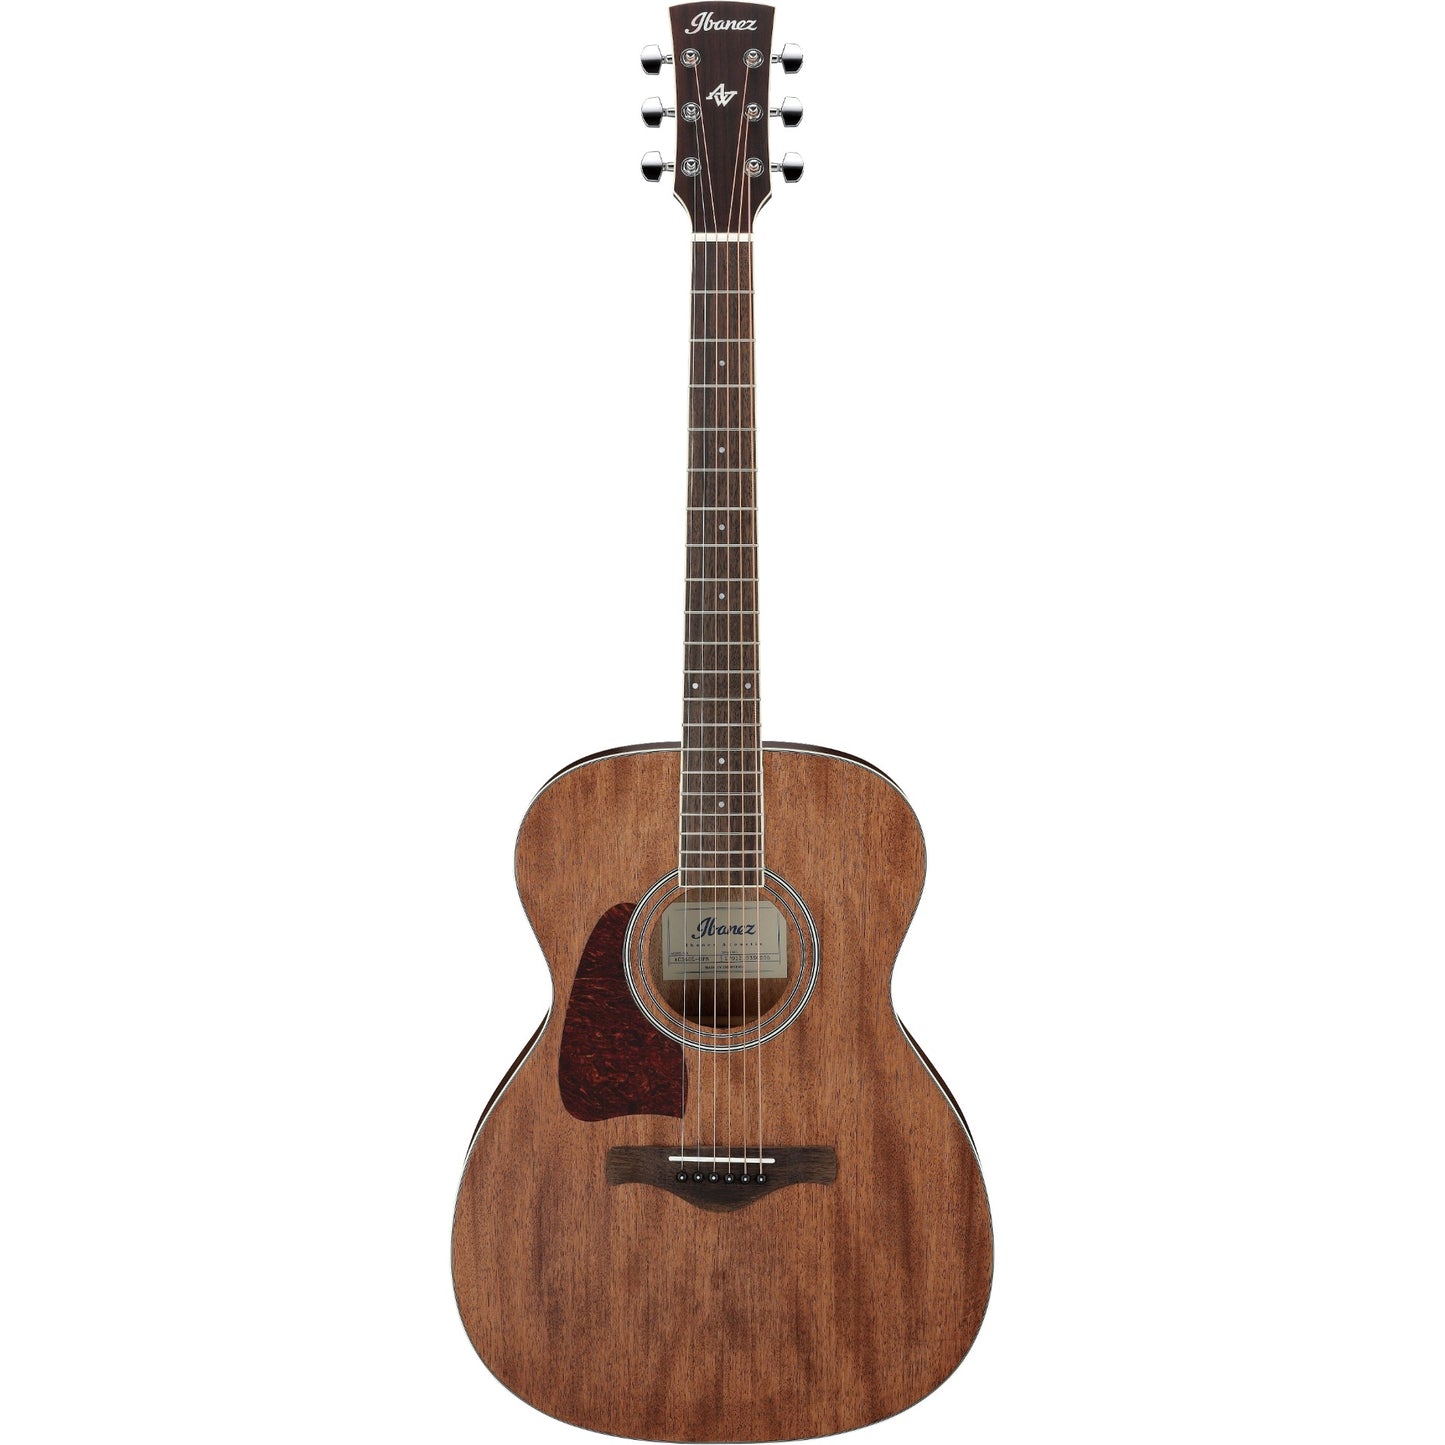 Ibanez AC340L Left Handed 6-String Acoustic Guitar in Open Pore Natural